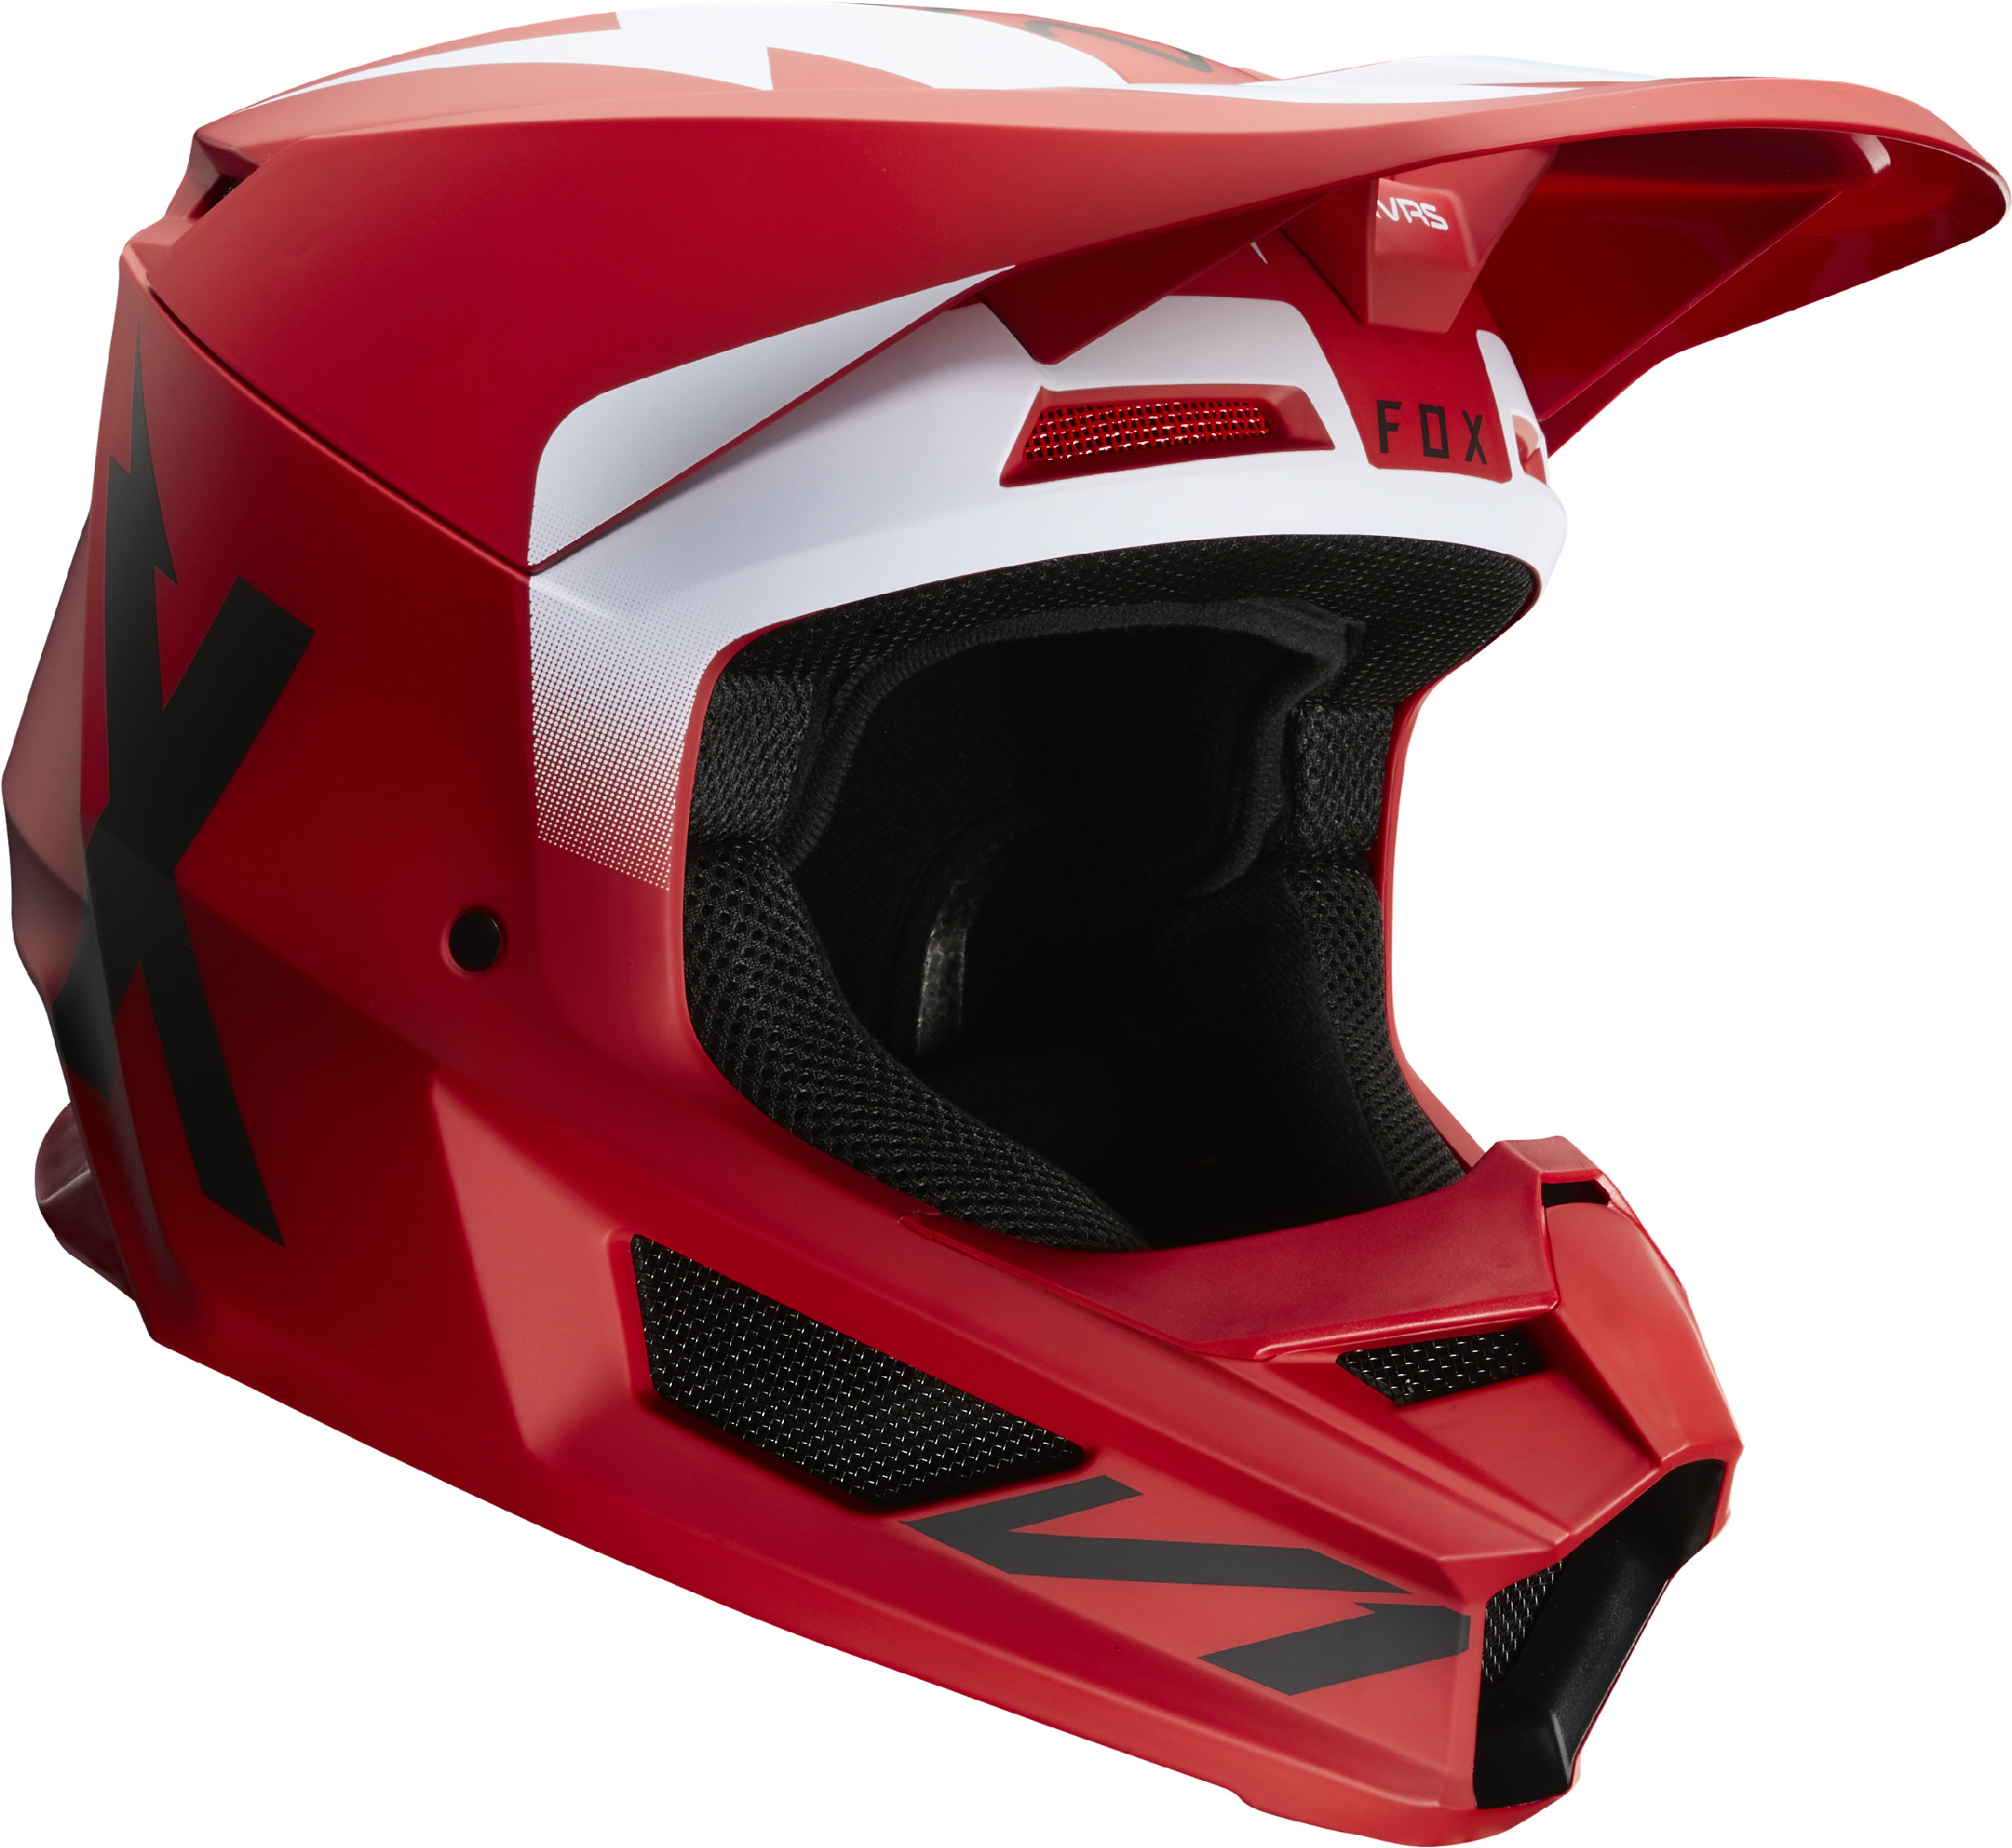 red dirt bike helmet